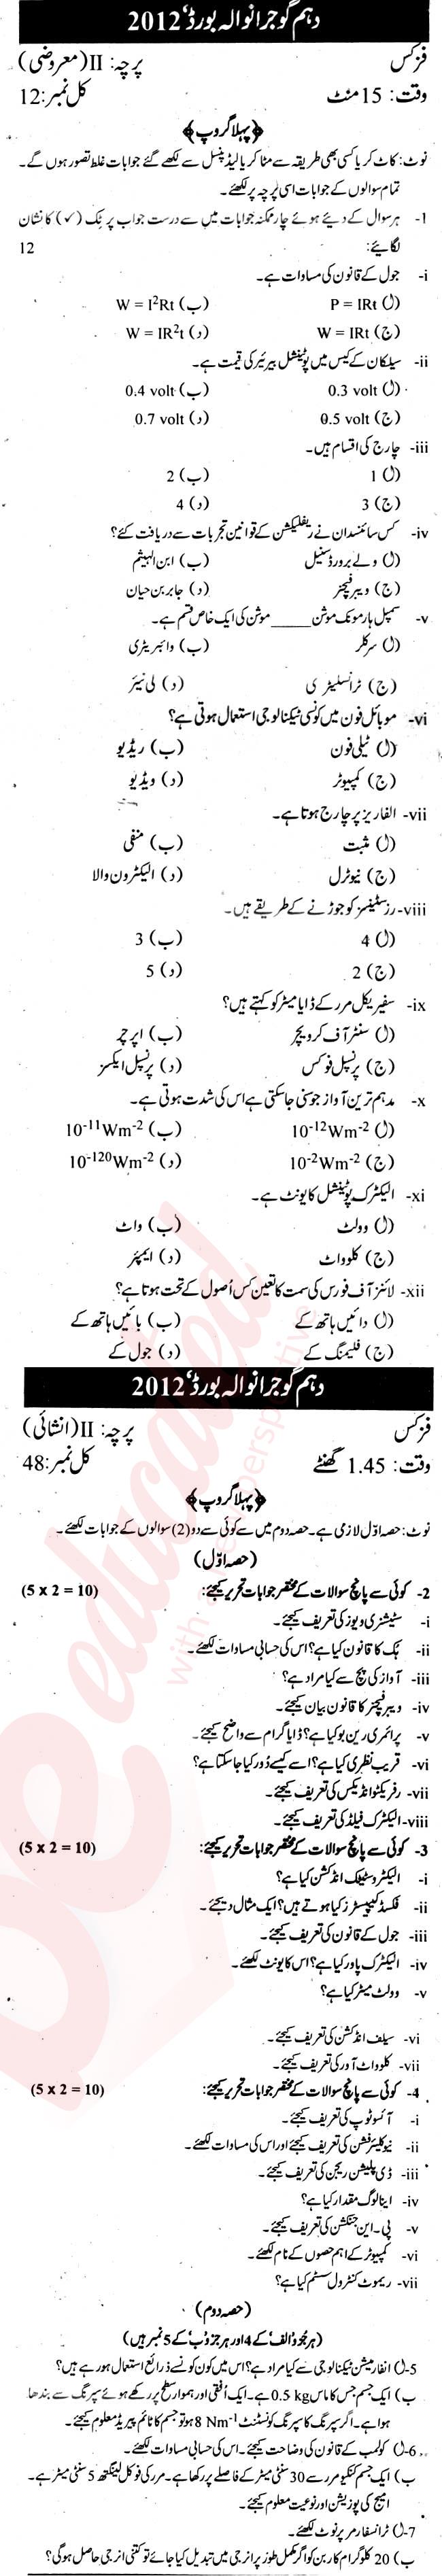 Physics 10th Urdu Medium Past Paper Group 1 BISE Gujranwala 2012